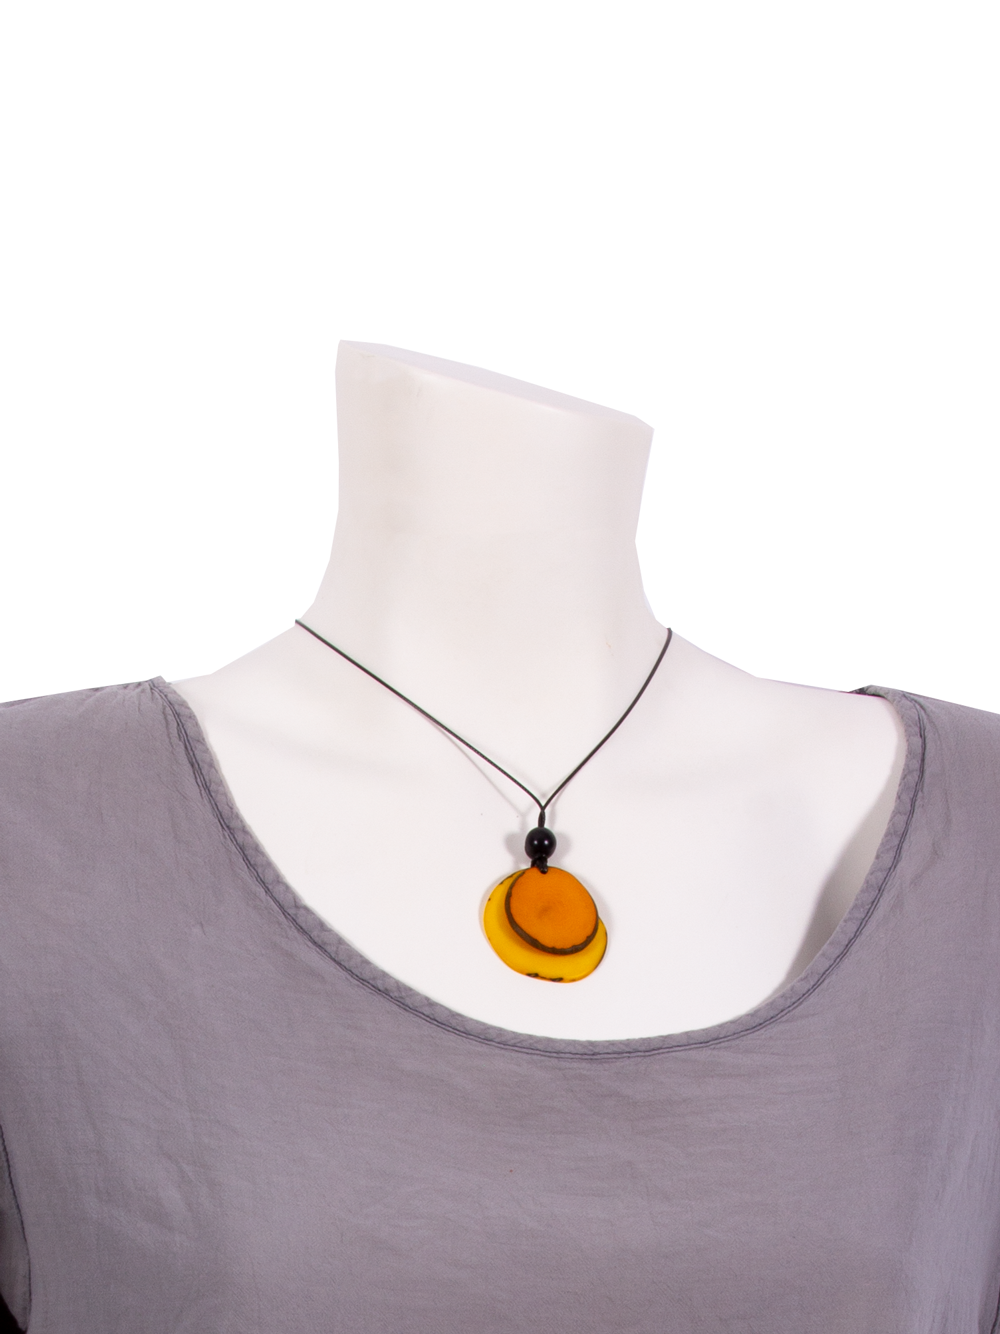 Halskette Chiloete gelb/orange - La Tagua Nuss